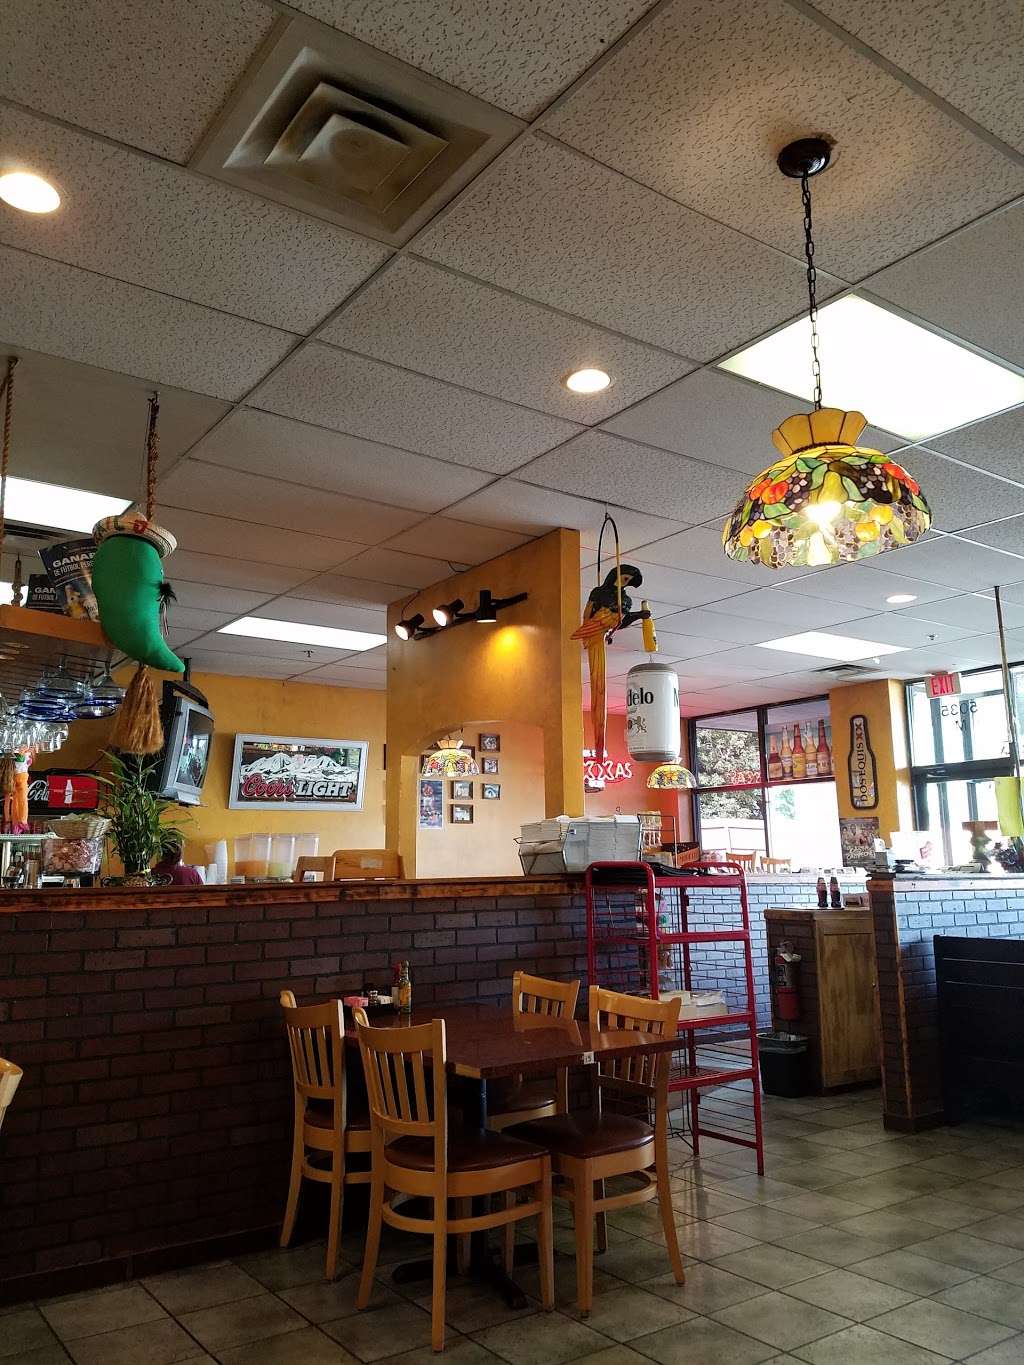 El Hidalguense Mexican Restaurant | 5035 W 71st St, Indianapolis, IN 46268 | Phone: (317) 328-0743